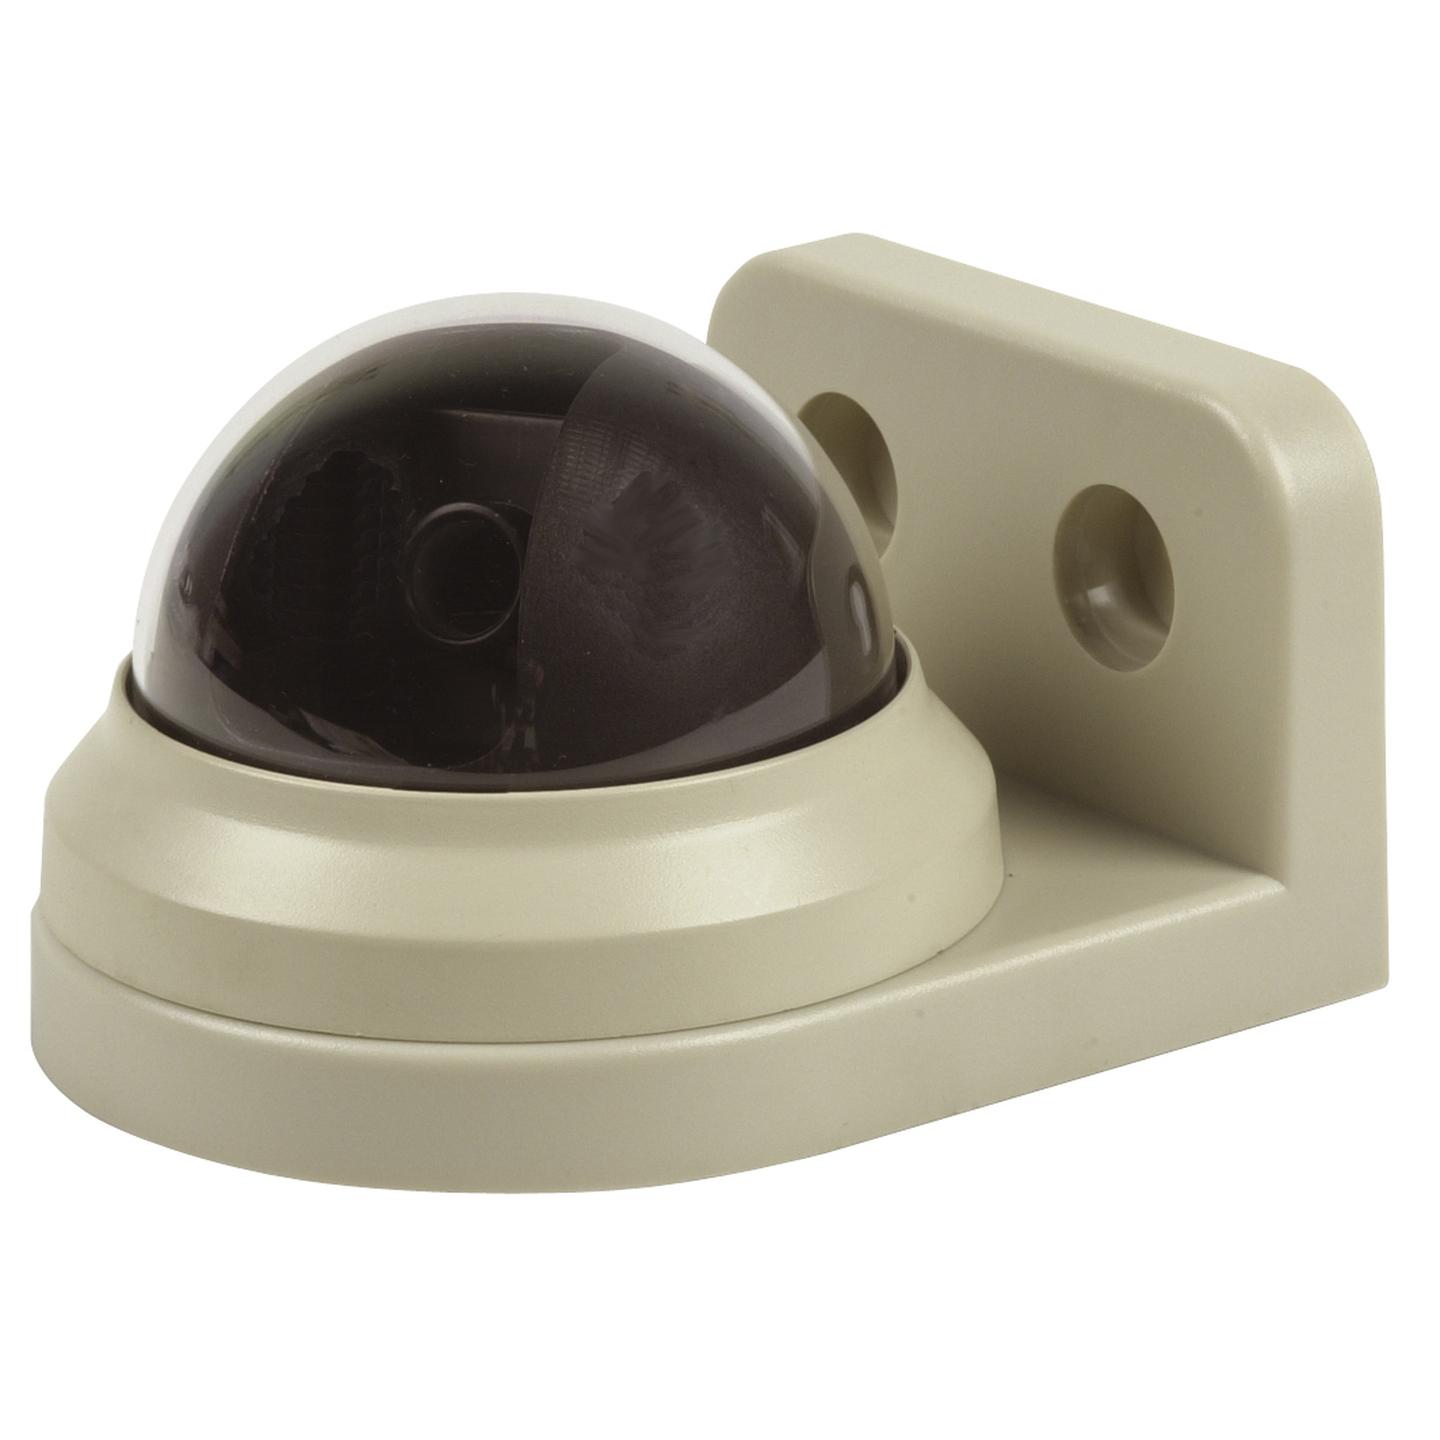 Plastic Dummy Dome Camera with L Type Bracket - Beige